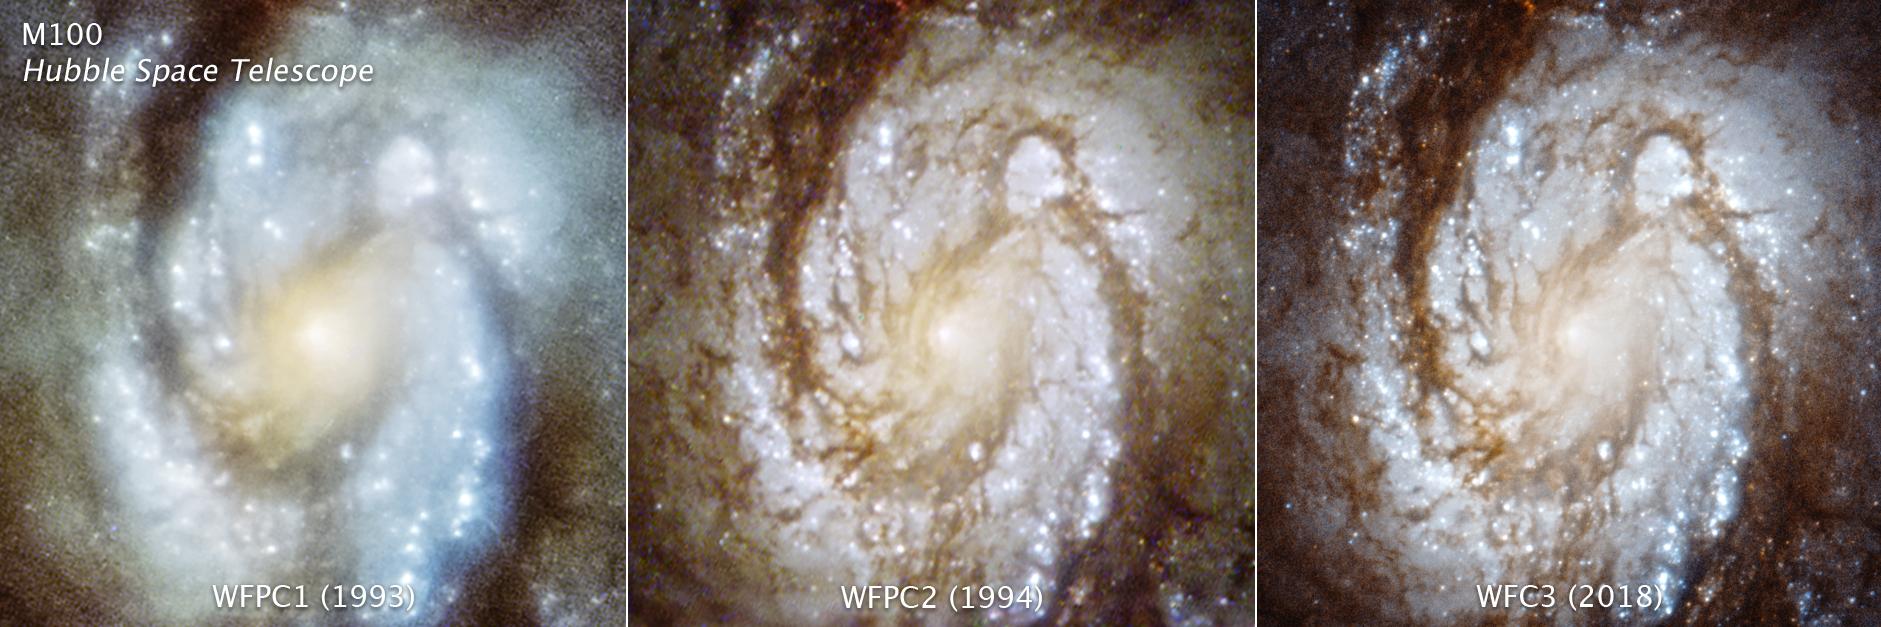 PIA22913-HubbleSpaceTelescope-ComparisonOfCameraImages-20181204.jpg